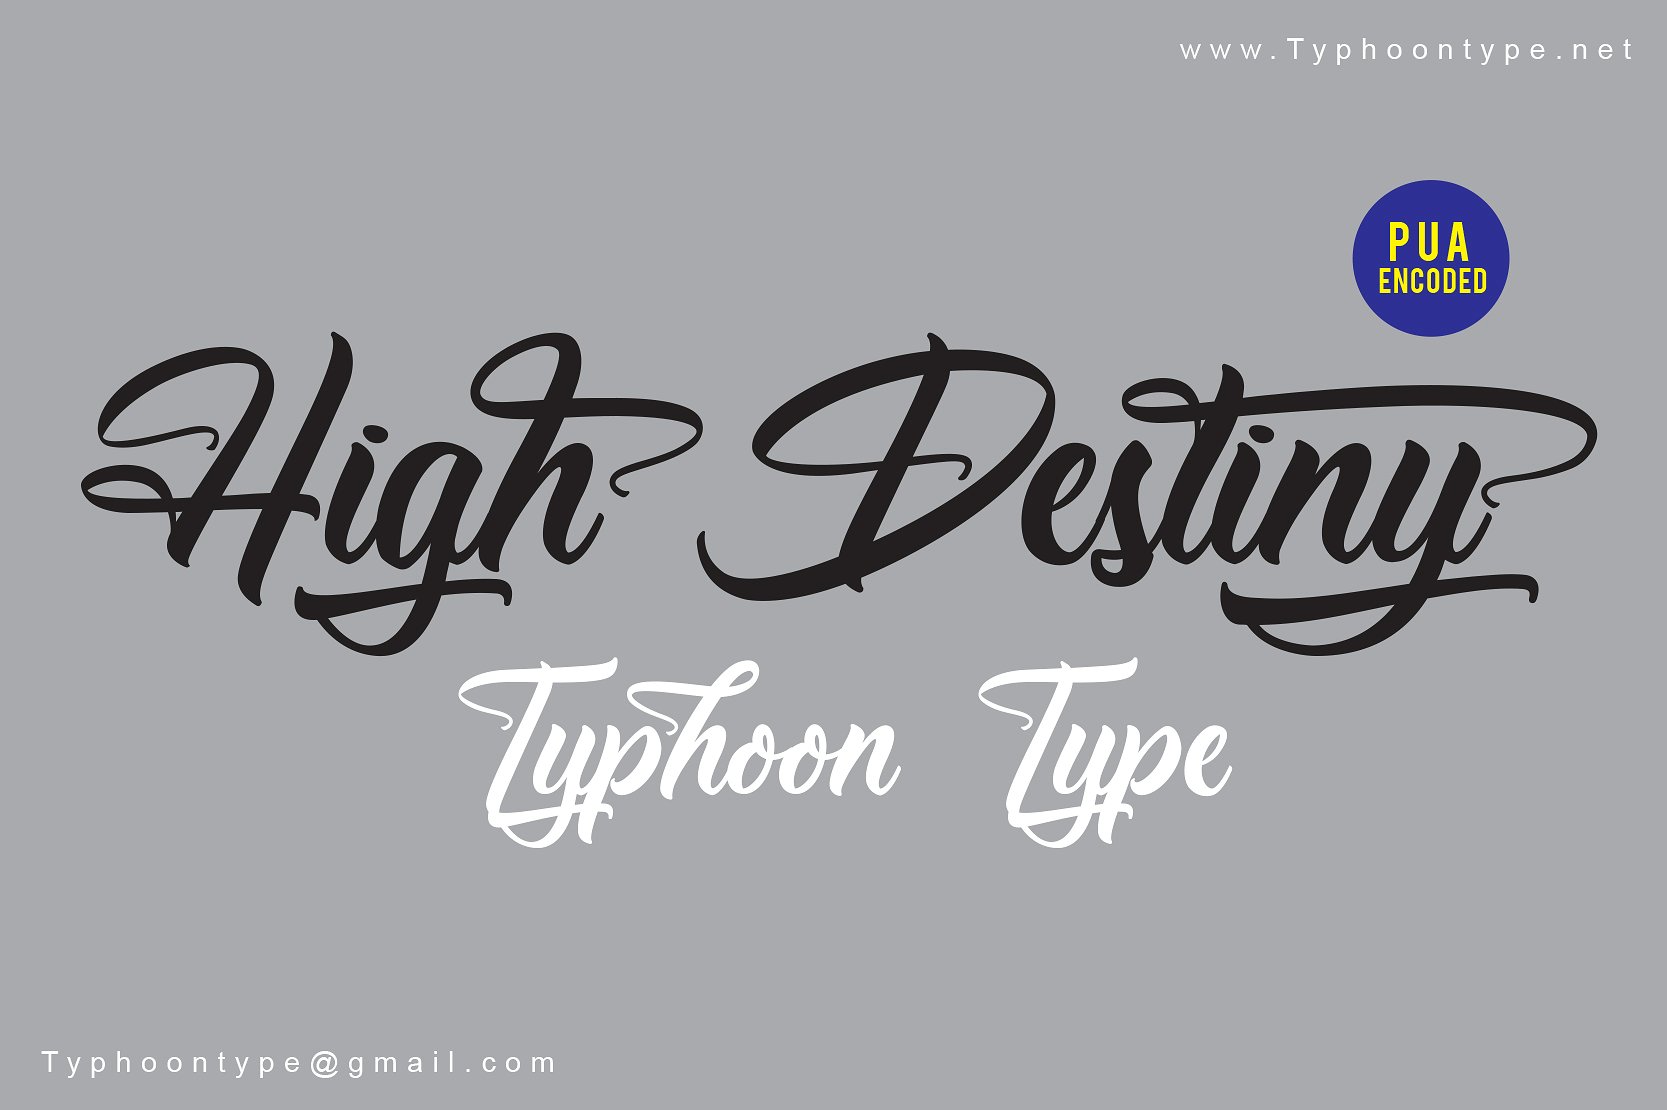 High Destiny Type for Logos